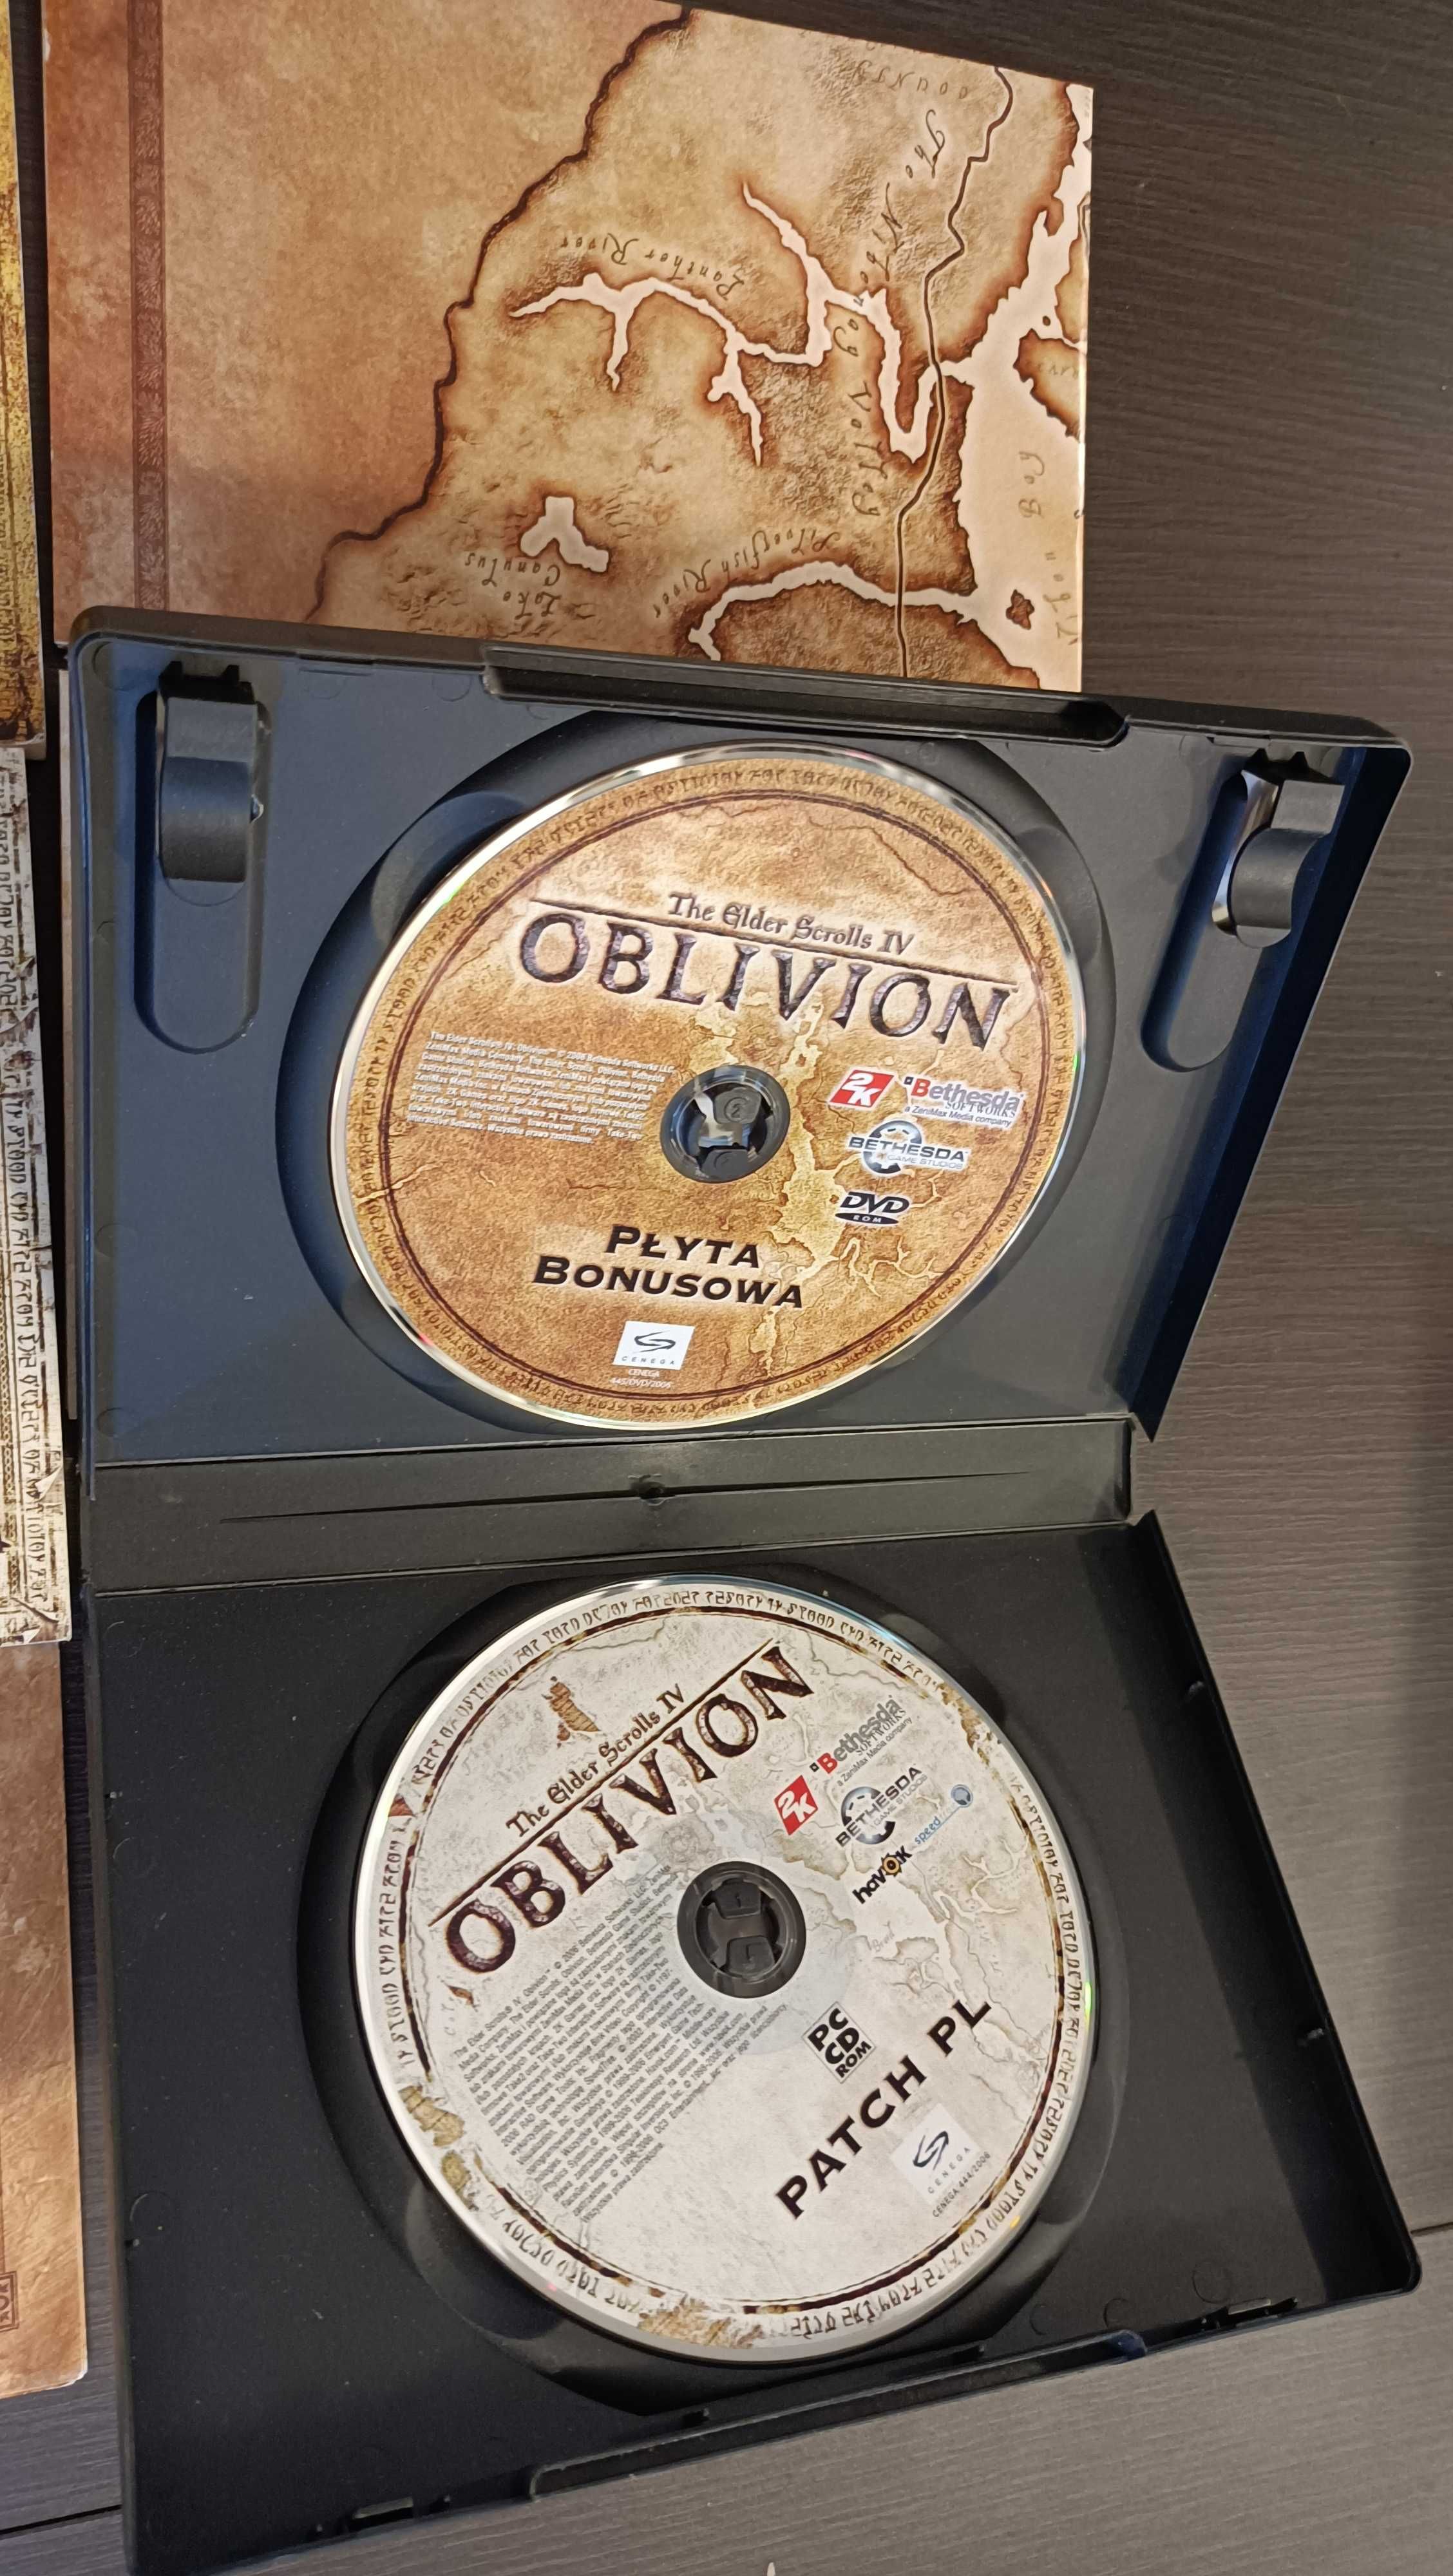 The Elder Scrolls IV: Oblivion PC